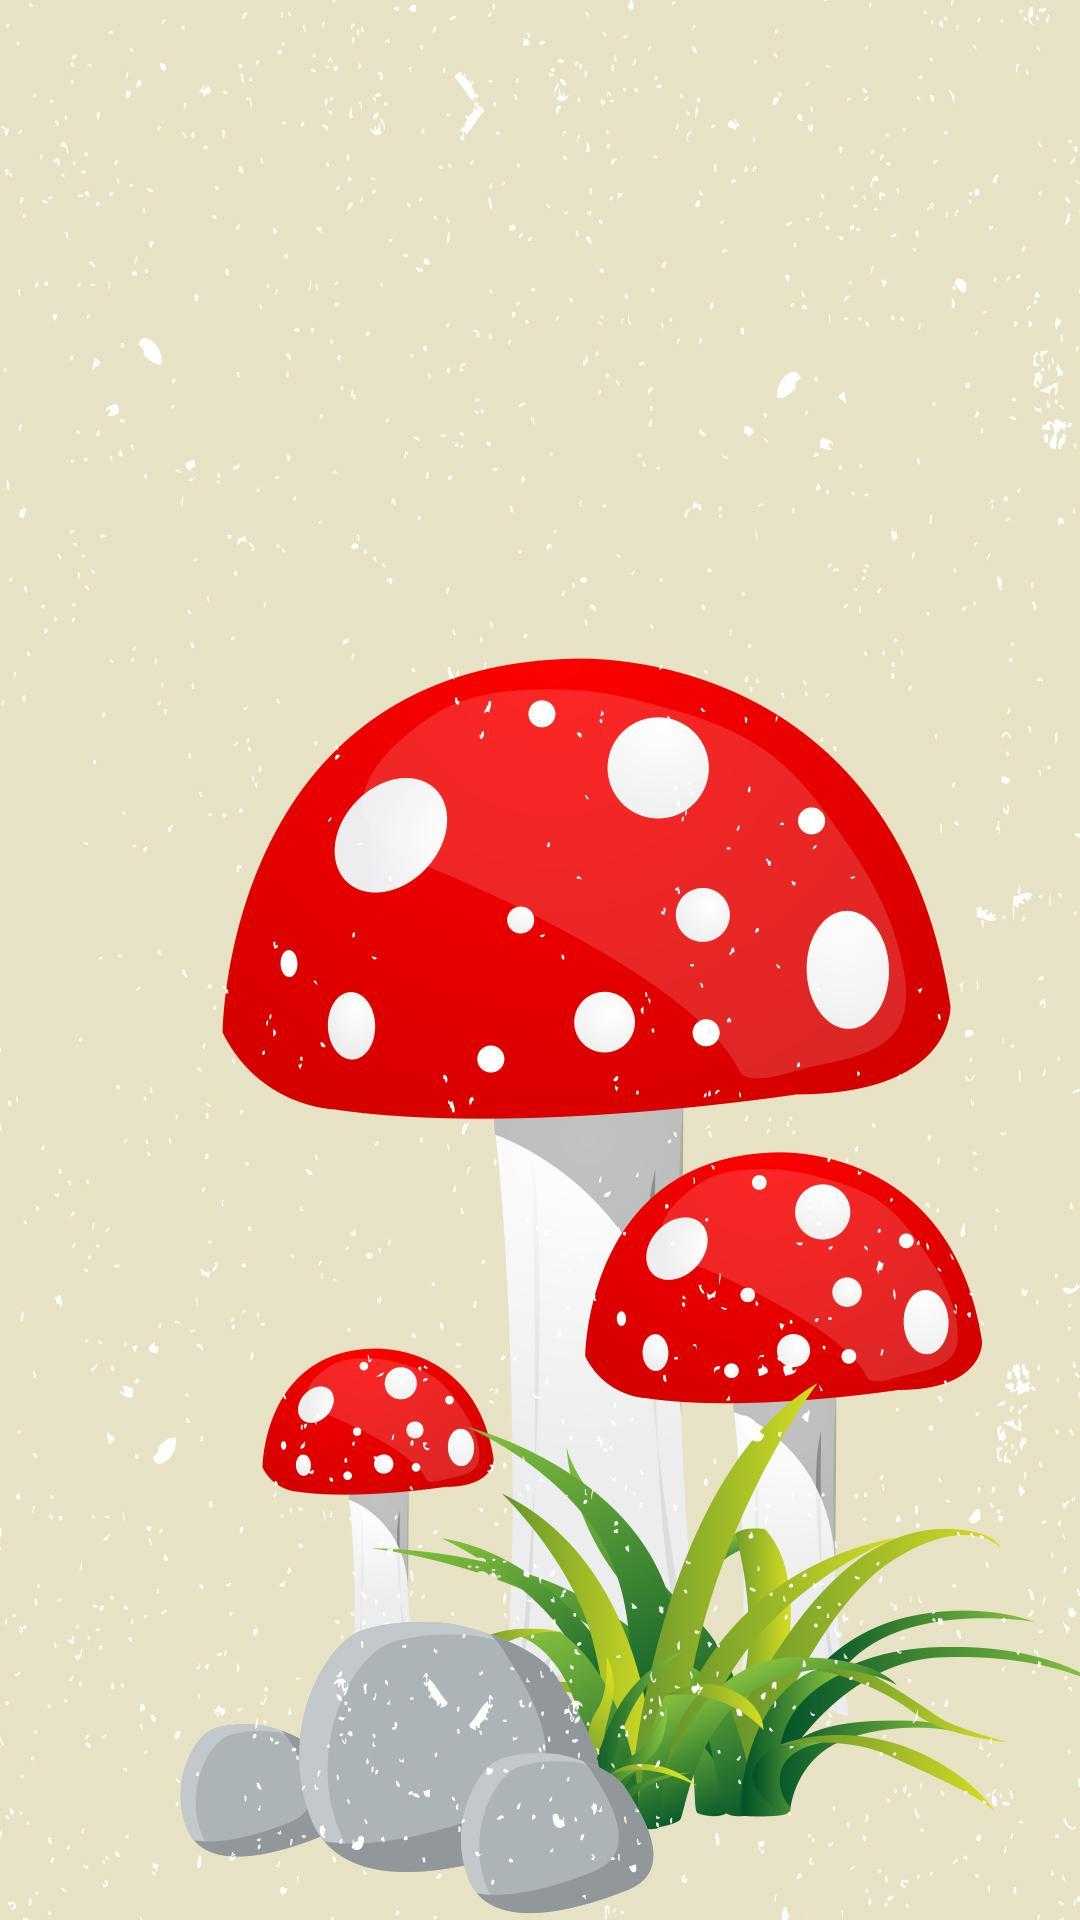 Aesthetic Mushrooms wallpaper by me1347  Download on ZEDGE  7ea1